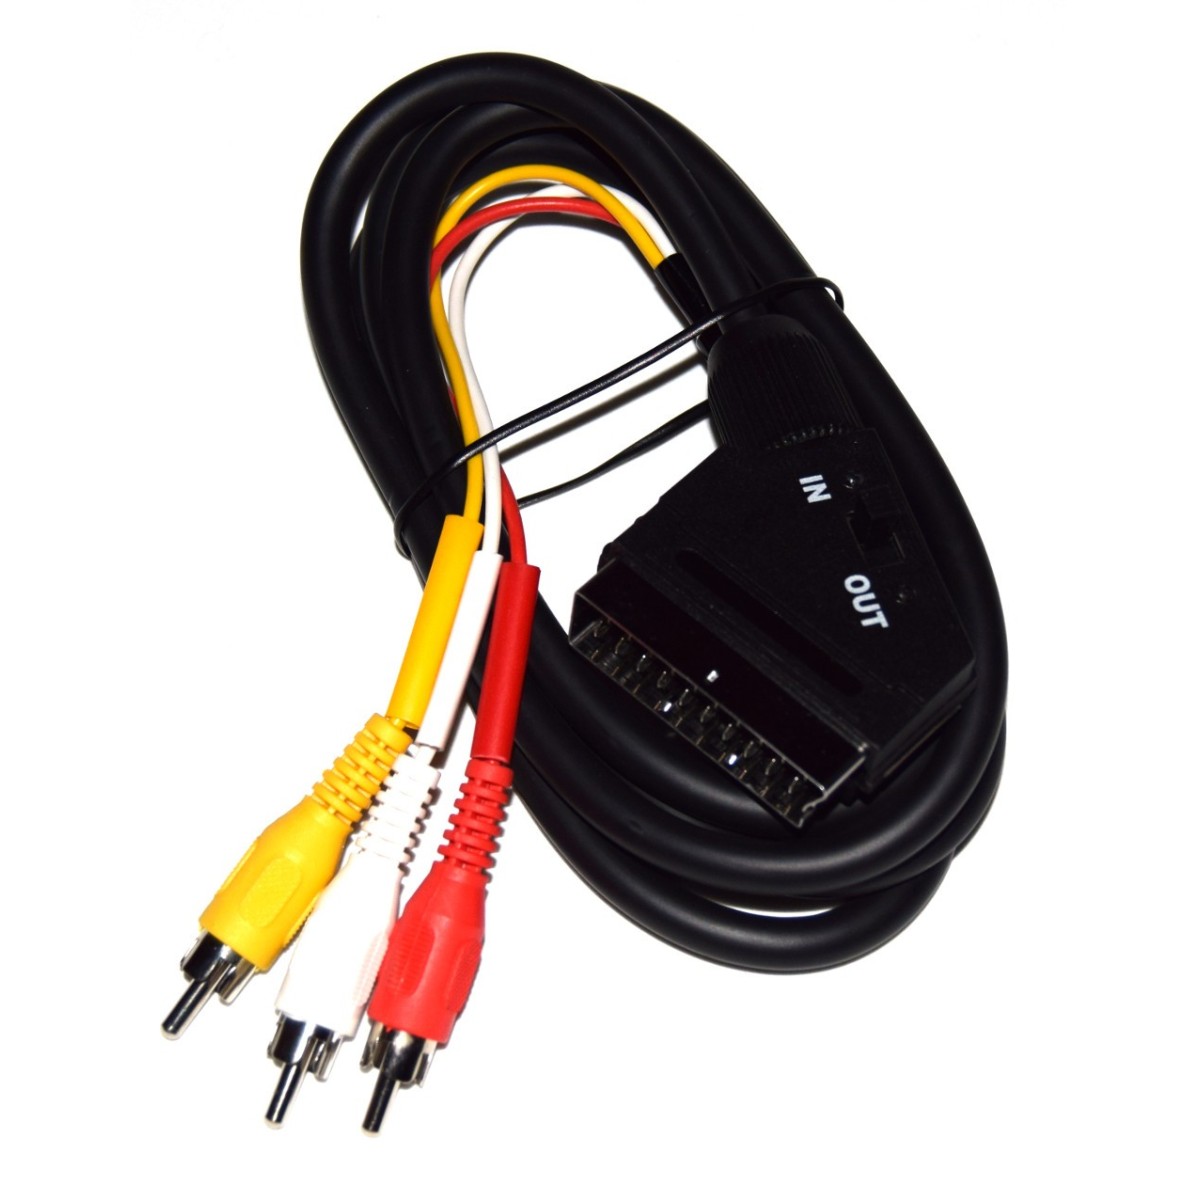 Cable euroconector AV estéreo estándar